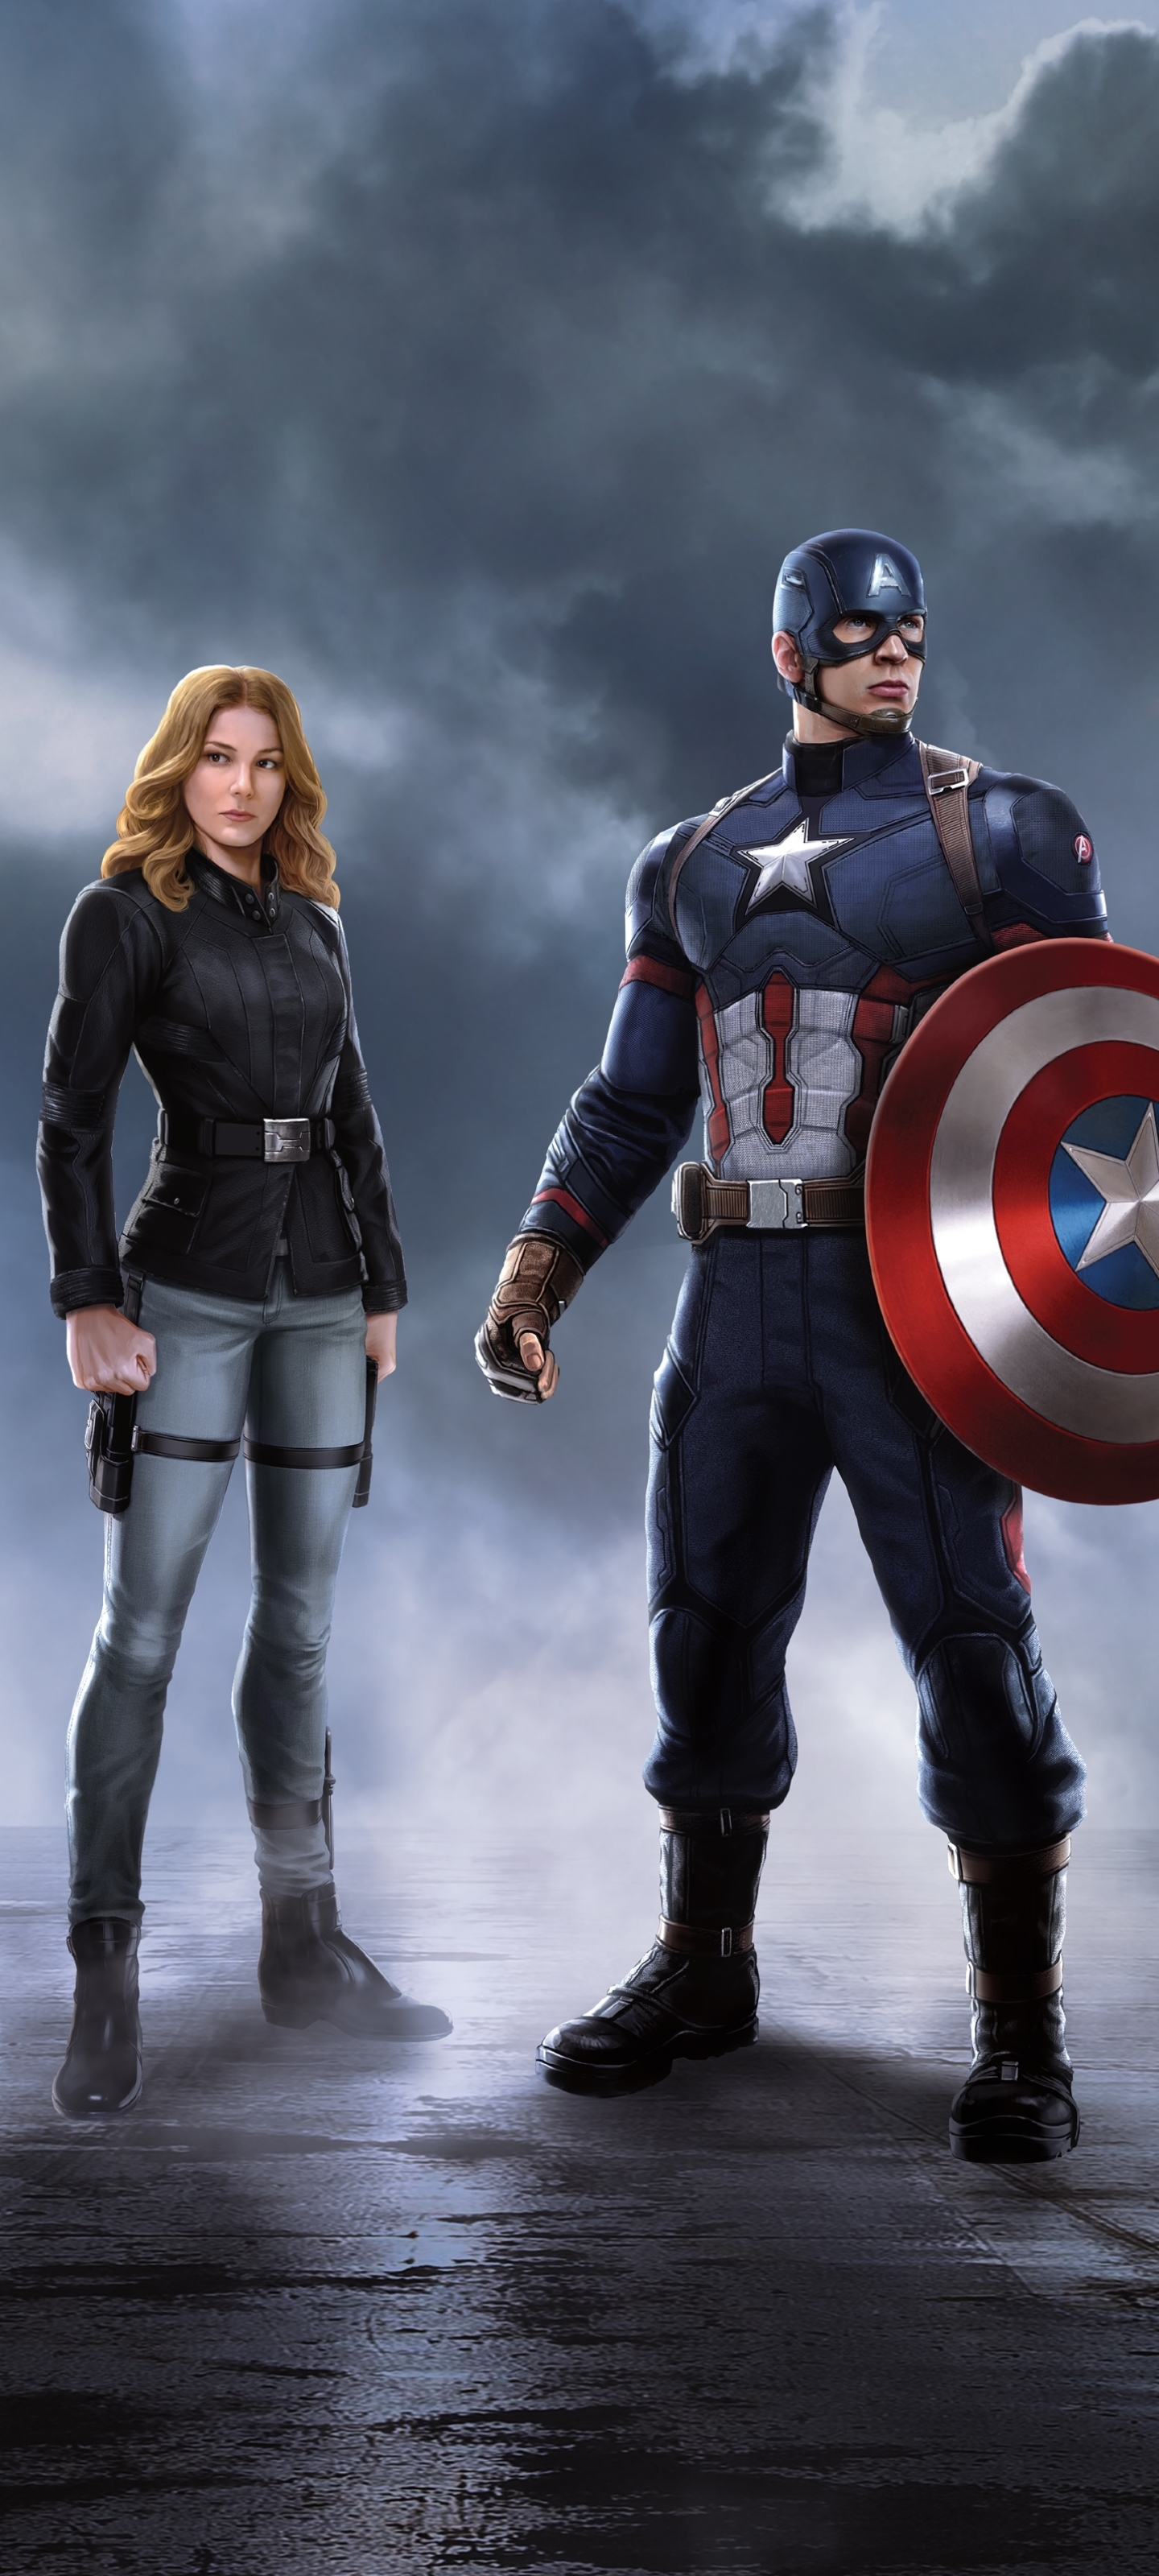 Descarga gratis la imagen Películas, Capitan América, Steve Rogers, Capitán América: Civil War, Sharon Carter, Capitan America en el escritorio de tu PC